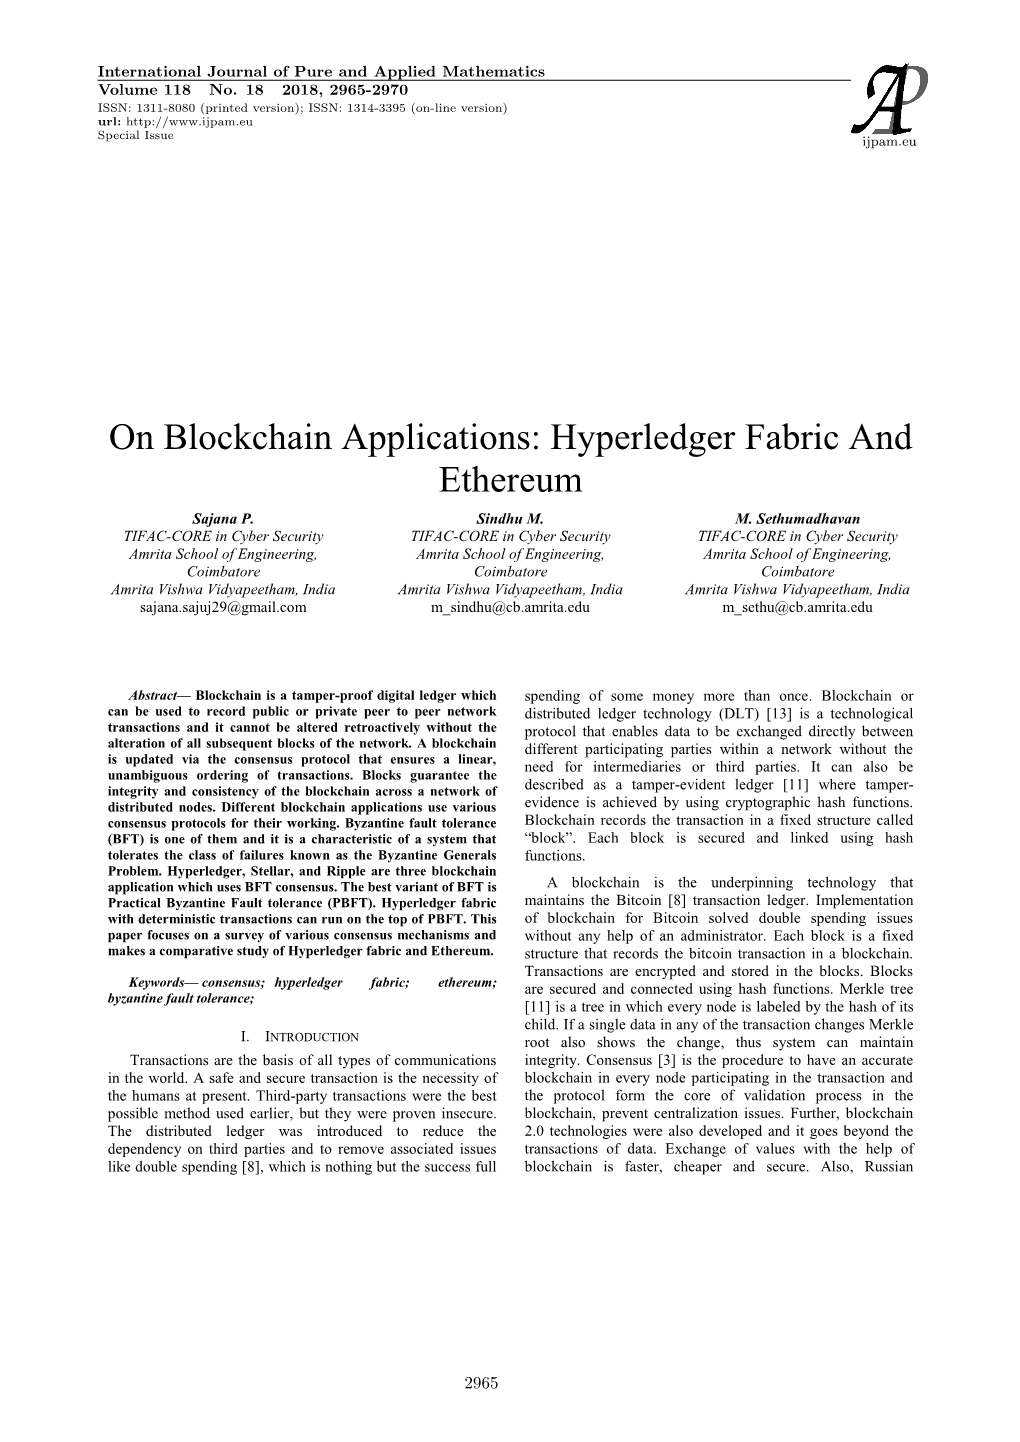 On Blockchain Applications: Hyperledger Fabric and Ethereum Sajana P